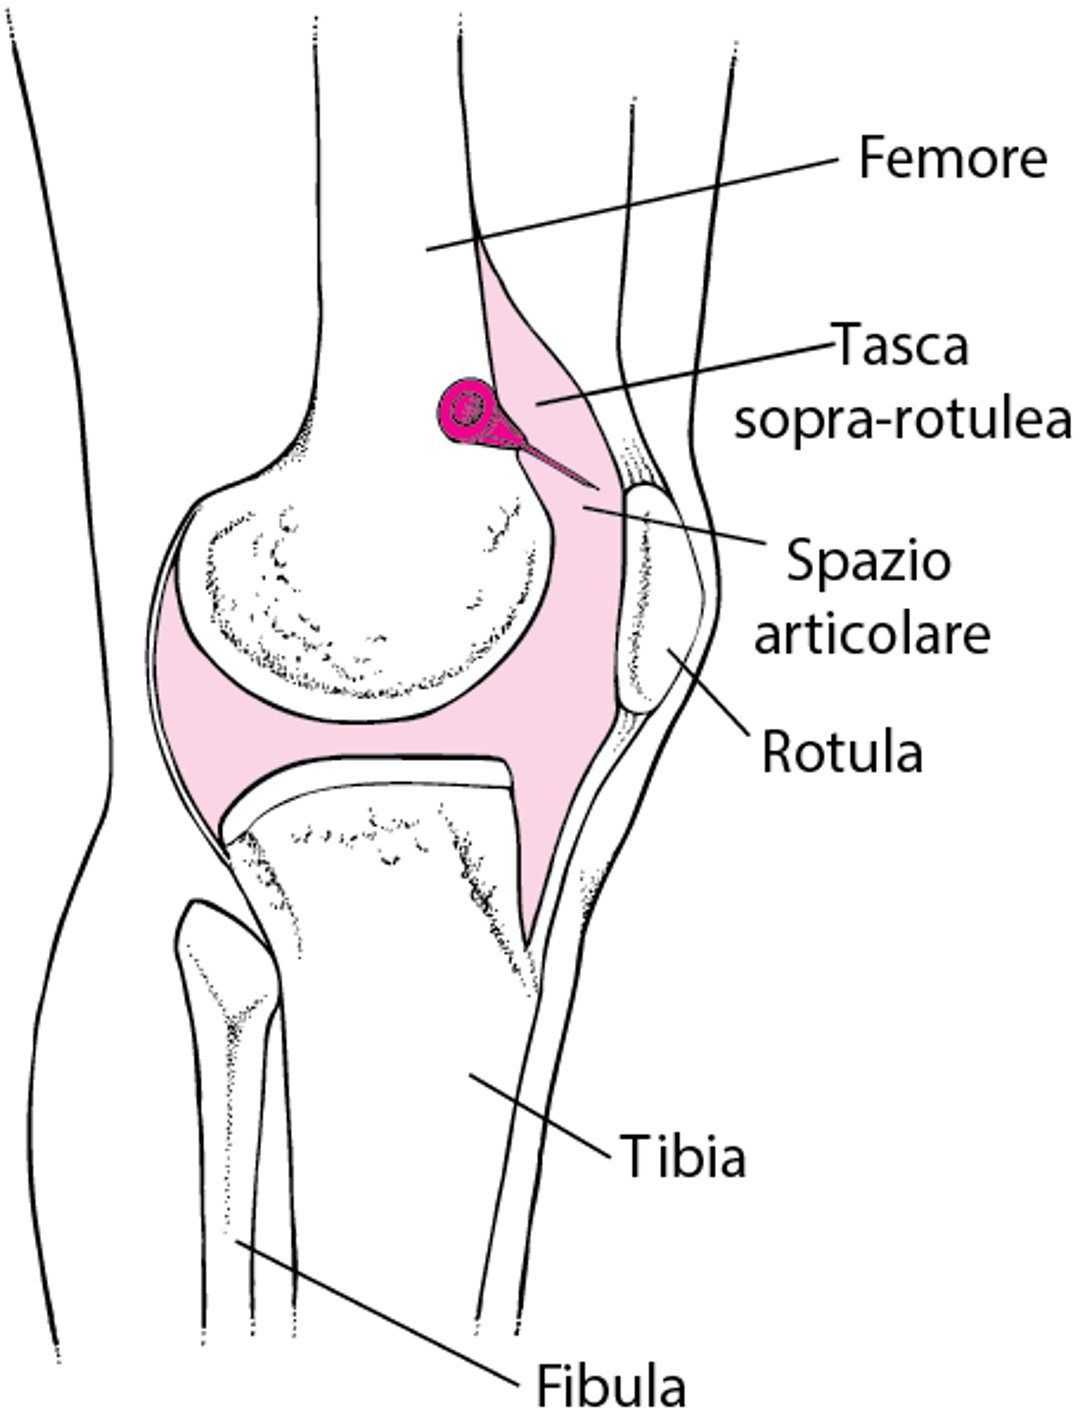 Artrocentesi del ginocchio